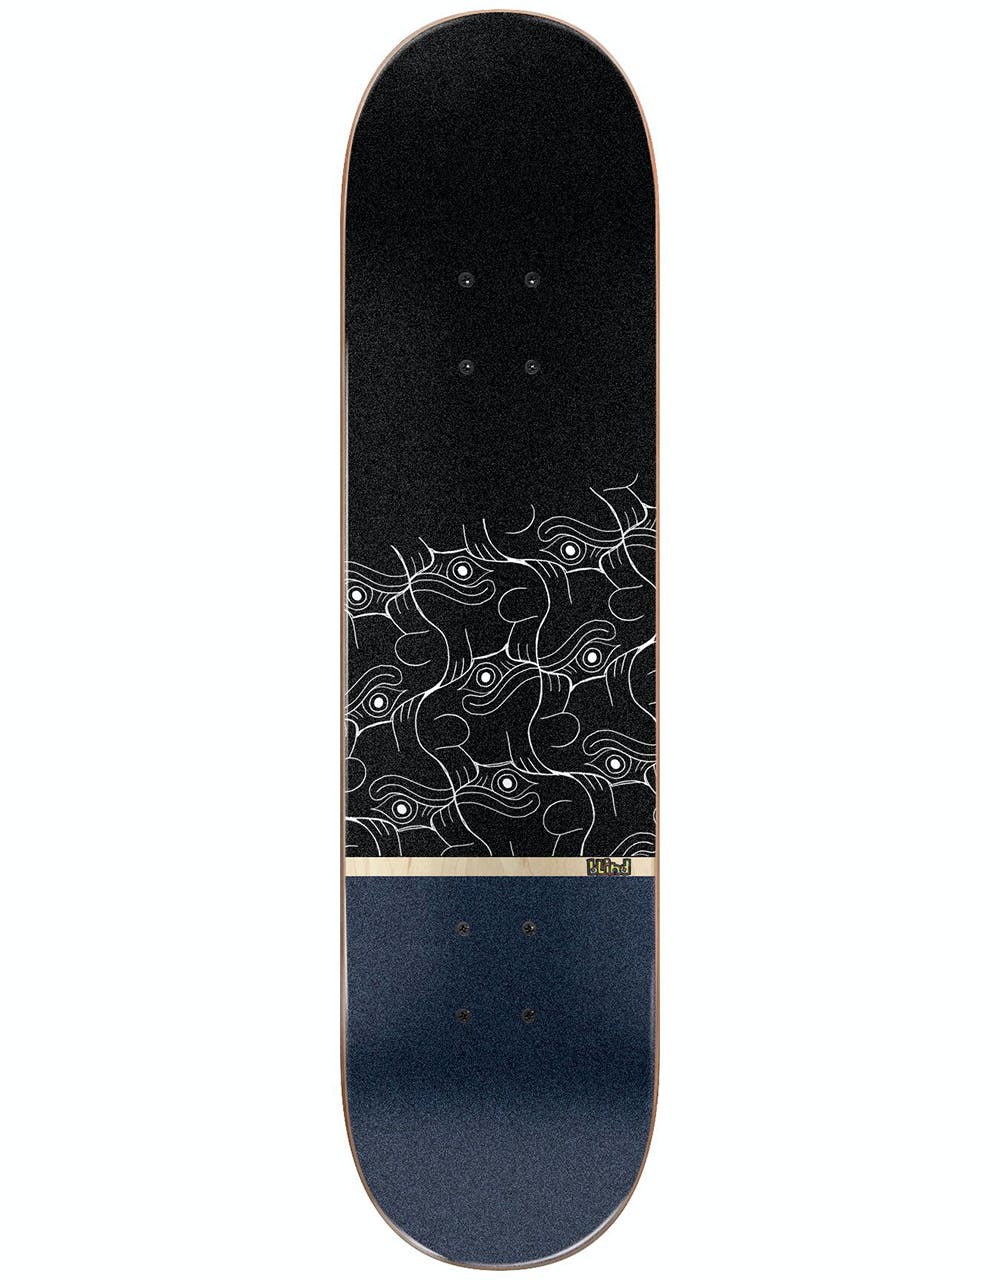 Blind Tile Style Premium Mid Complete Skateboard - 7.25"